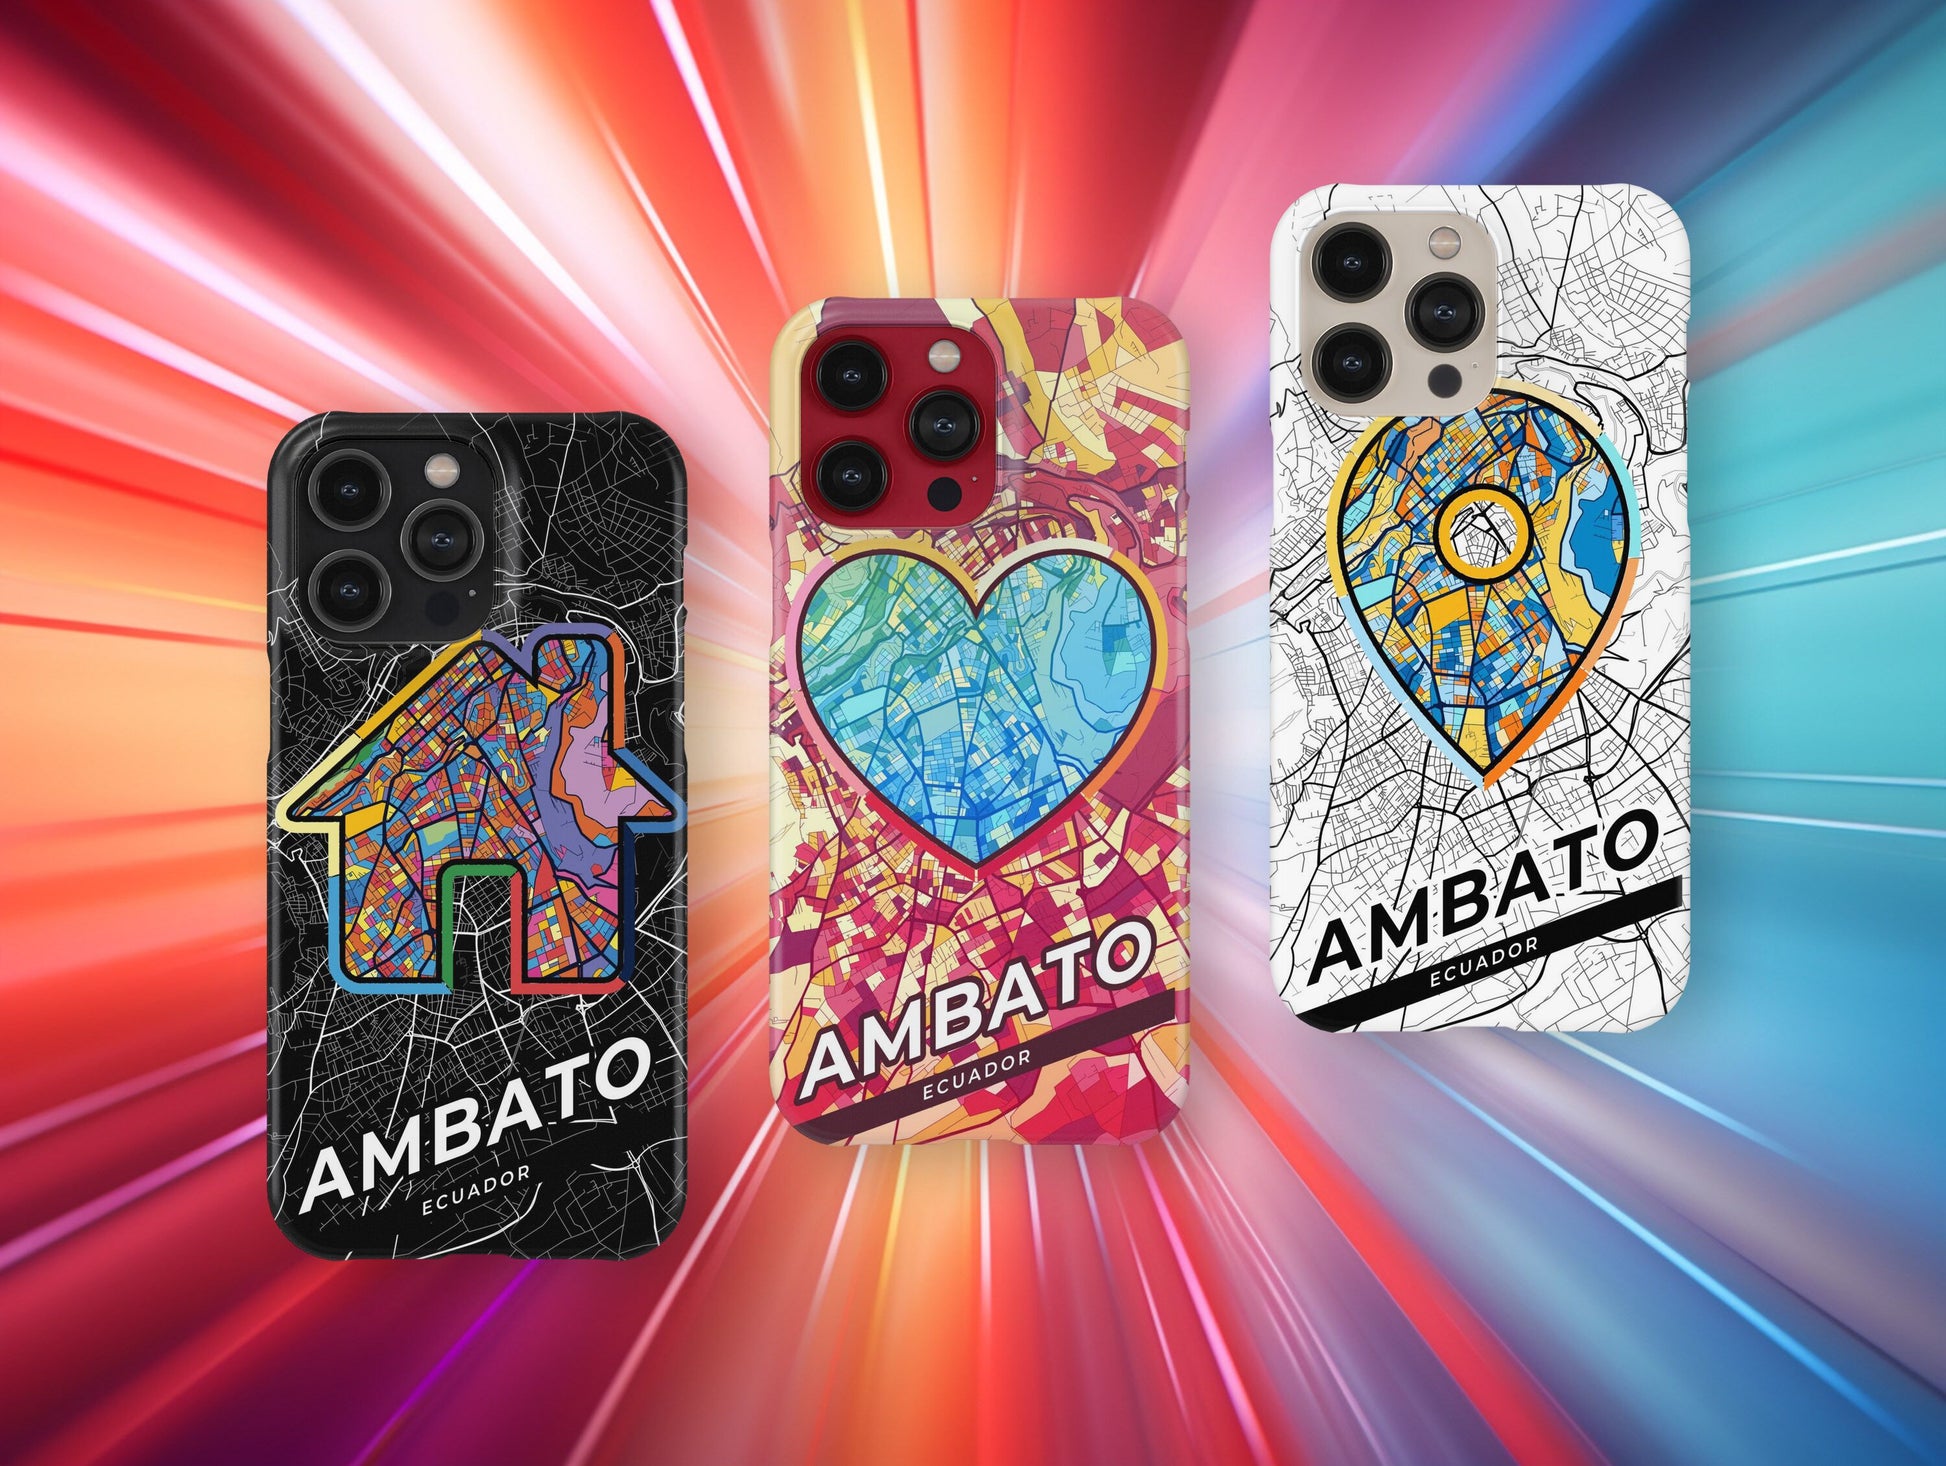 Ambato Ecuador slim phone case with colorful icon. Birthday, wedding or housewarming gift. Couple match cases.